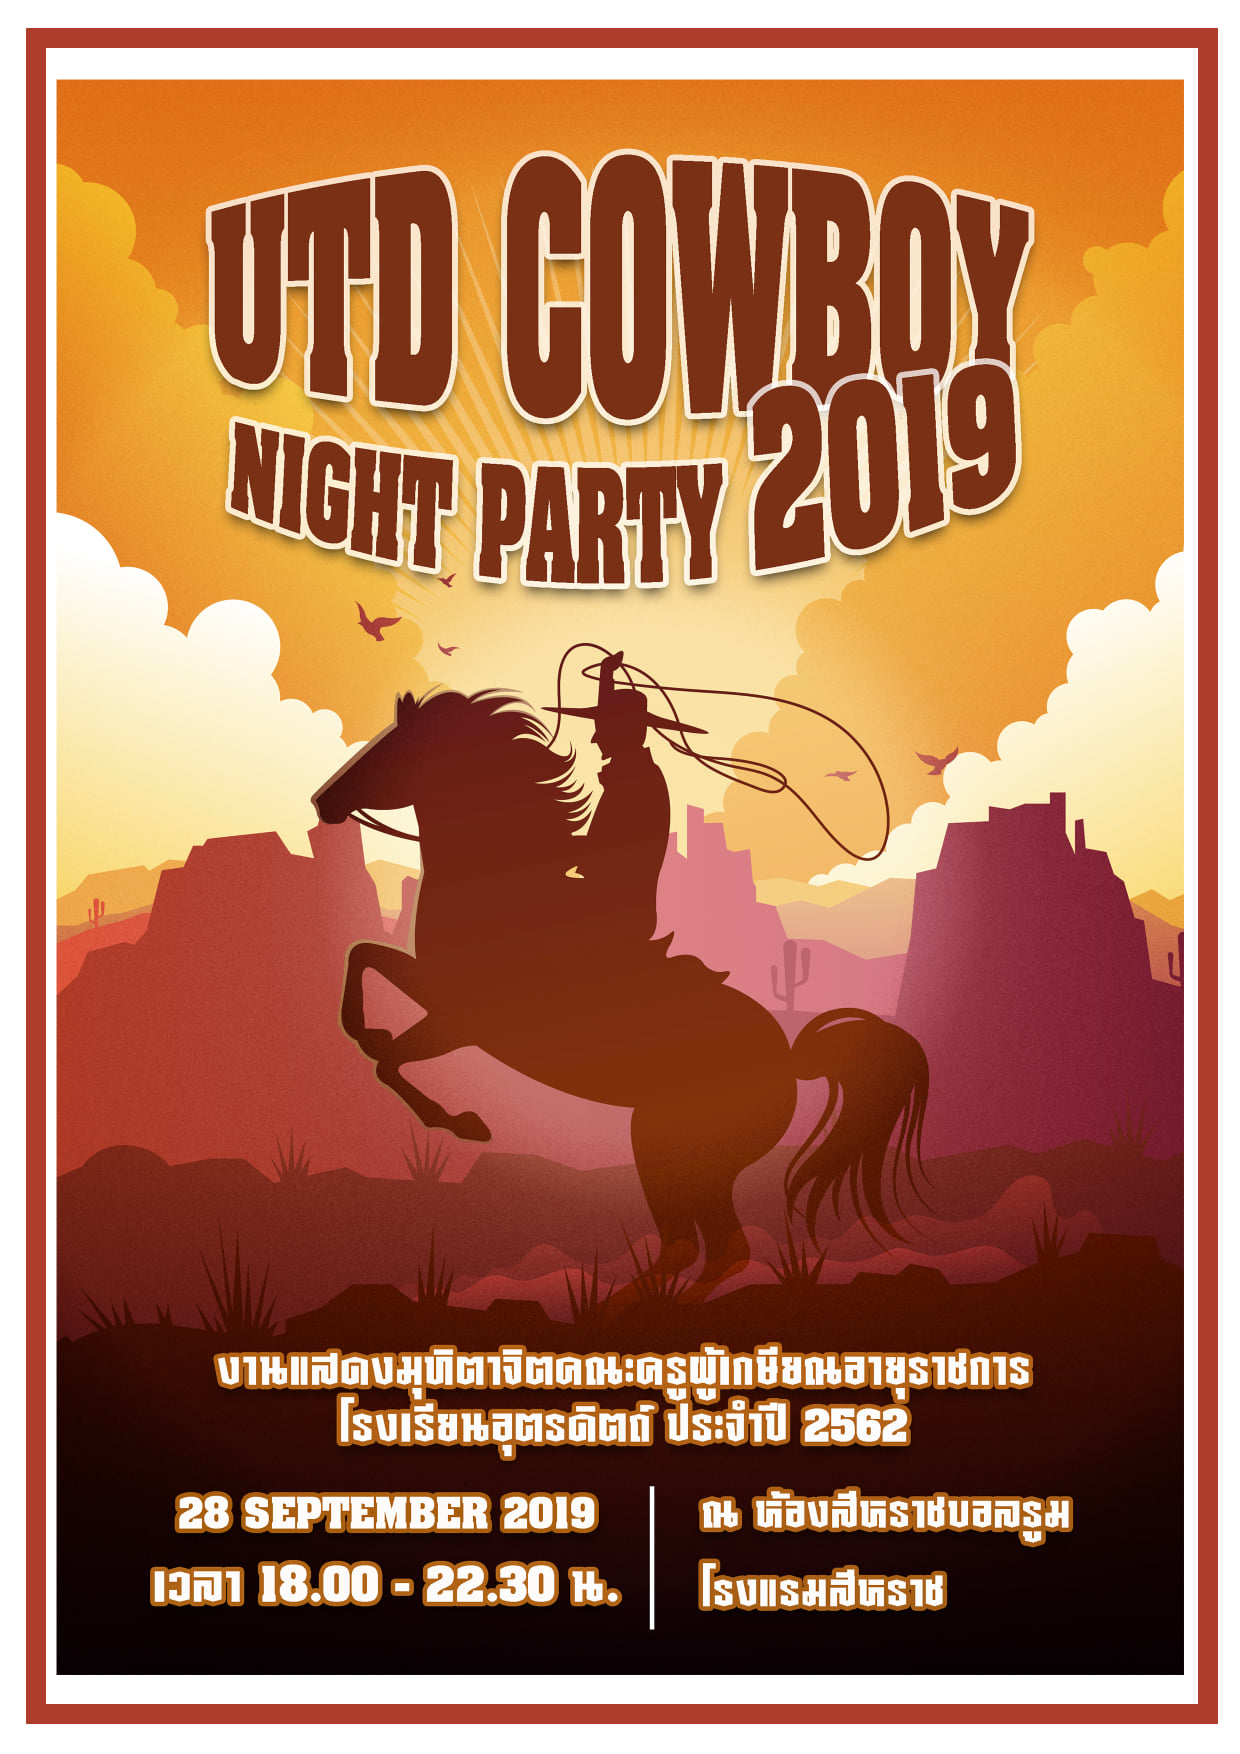 “UTD COWBOY NIGHT PARTY 2019”